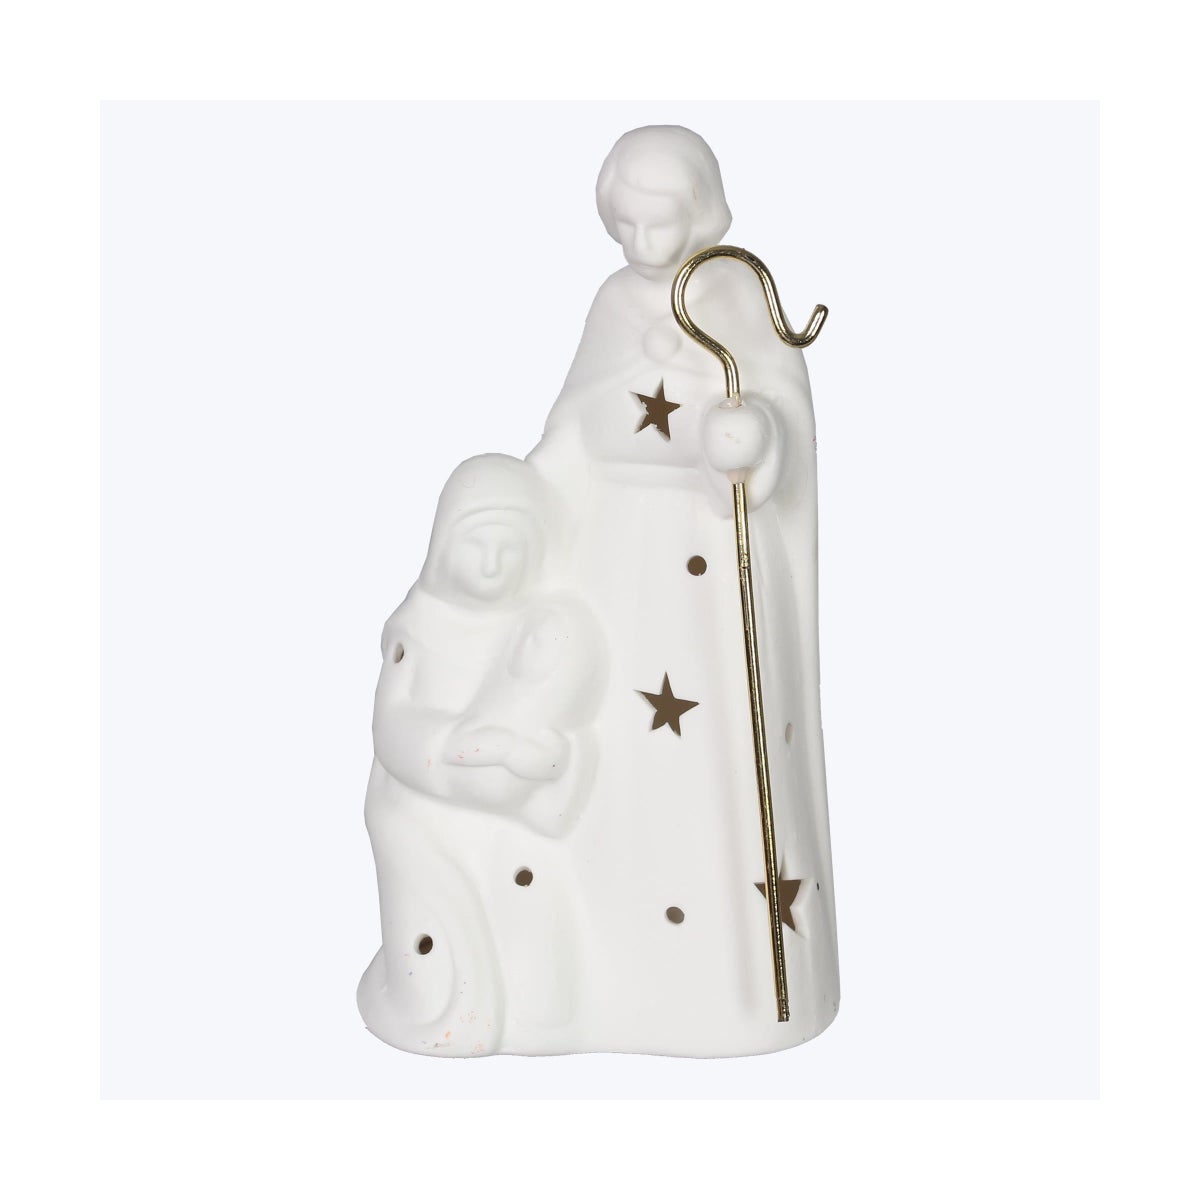 Ceramic Nativity with LED Light, White